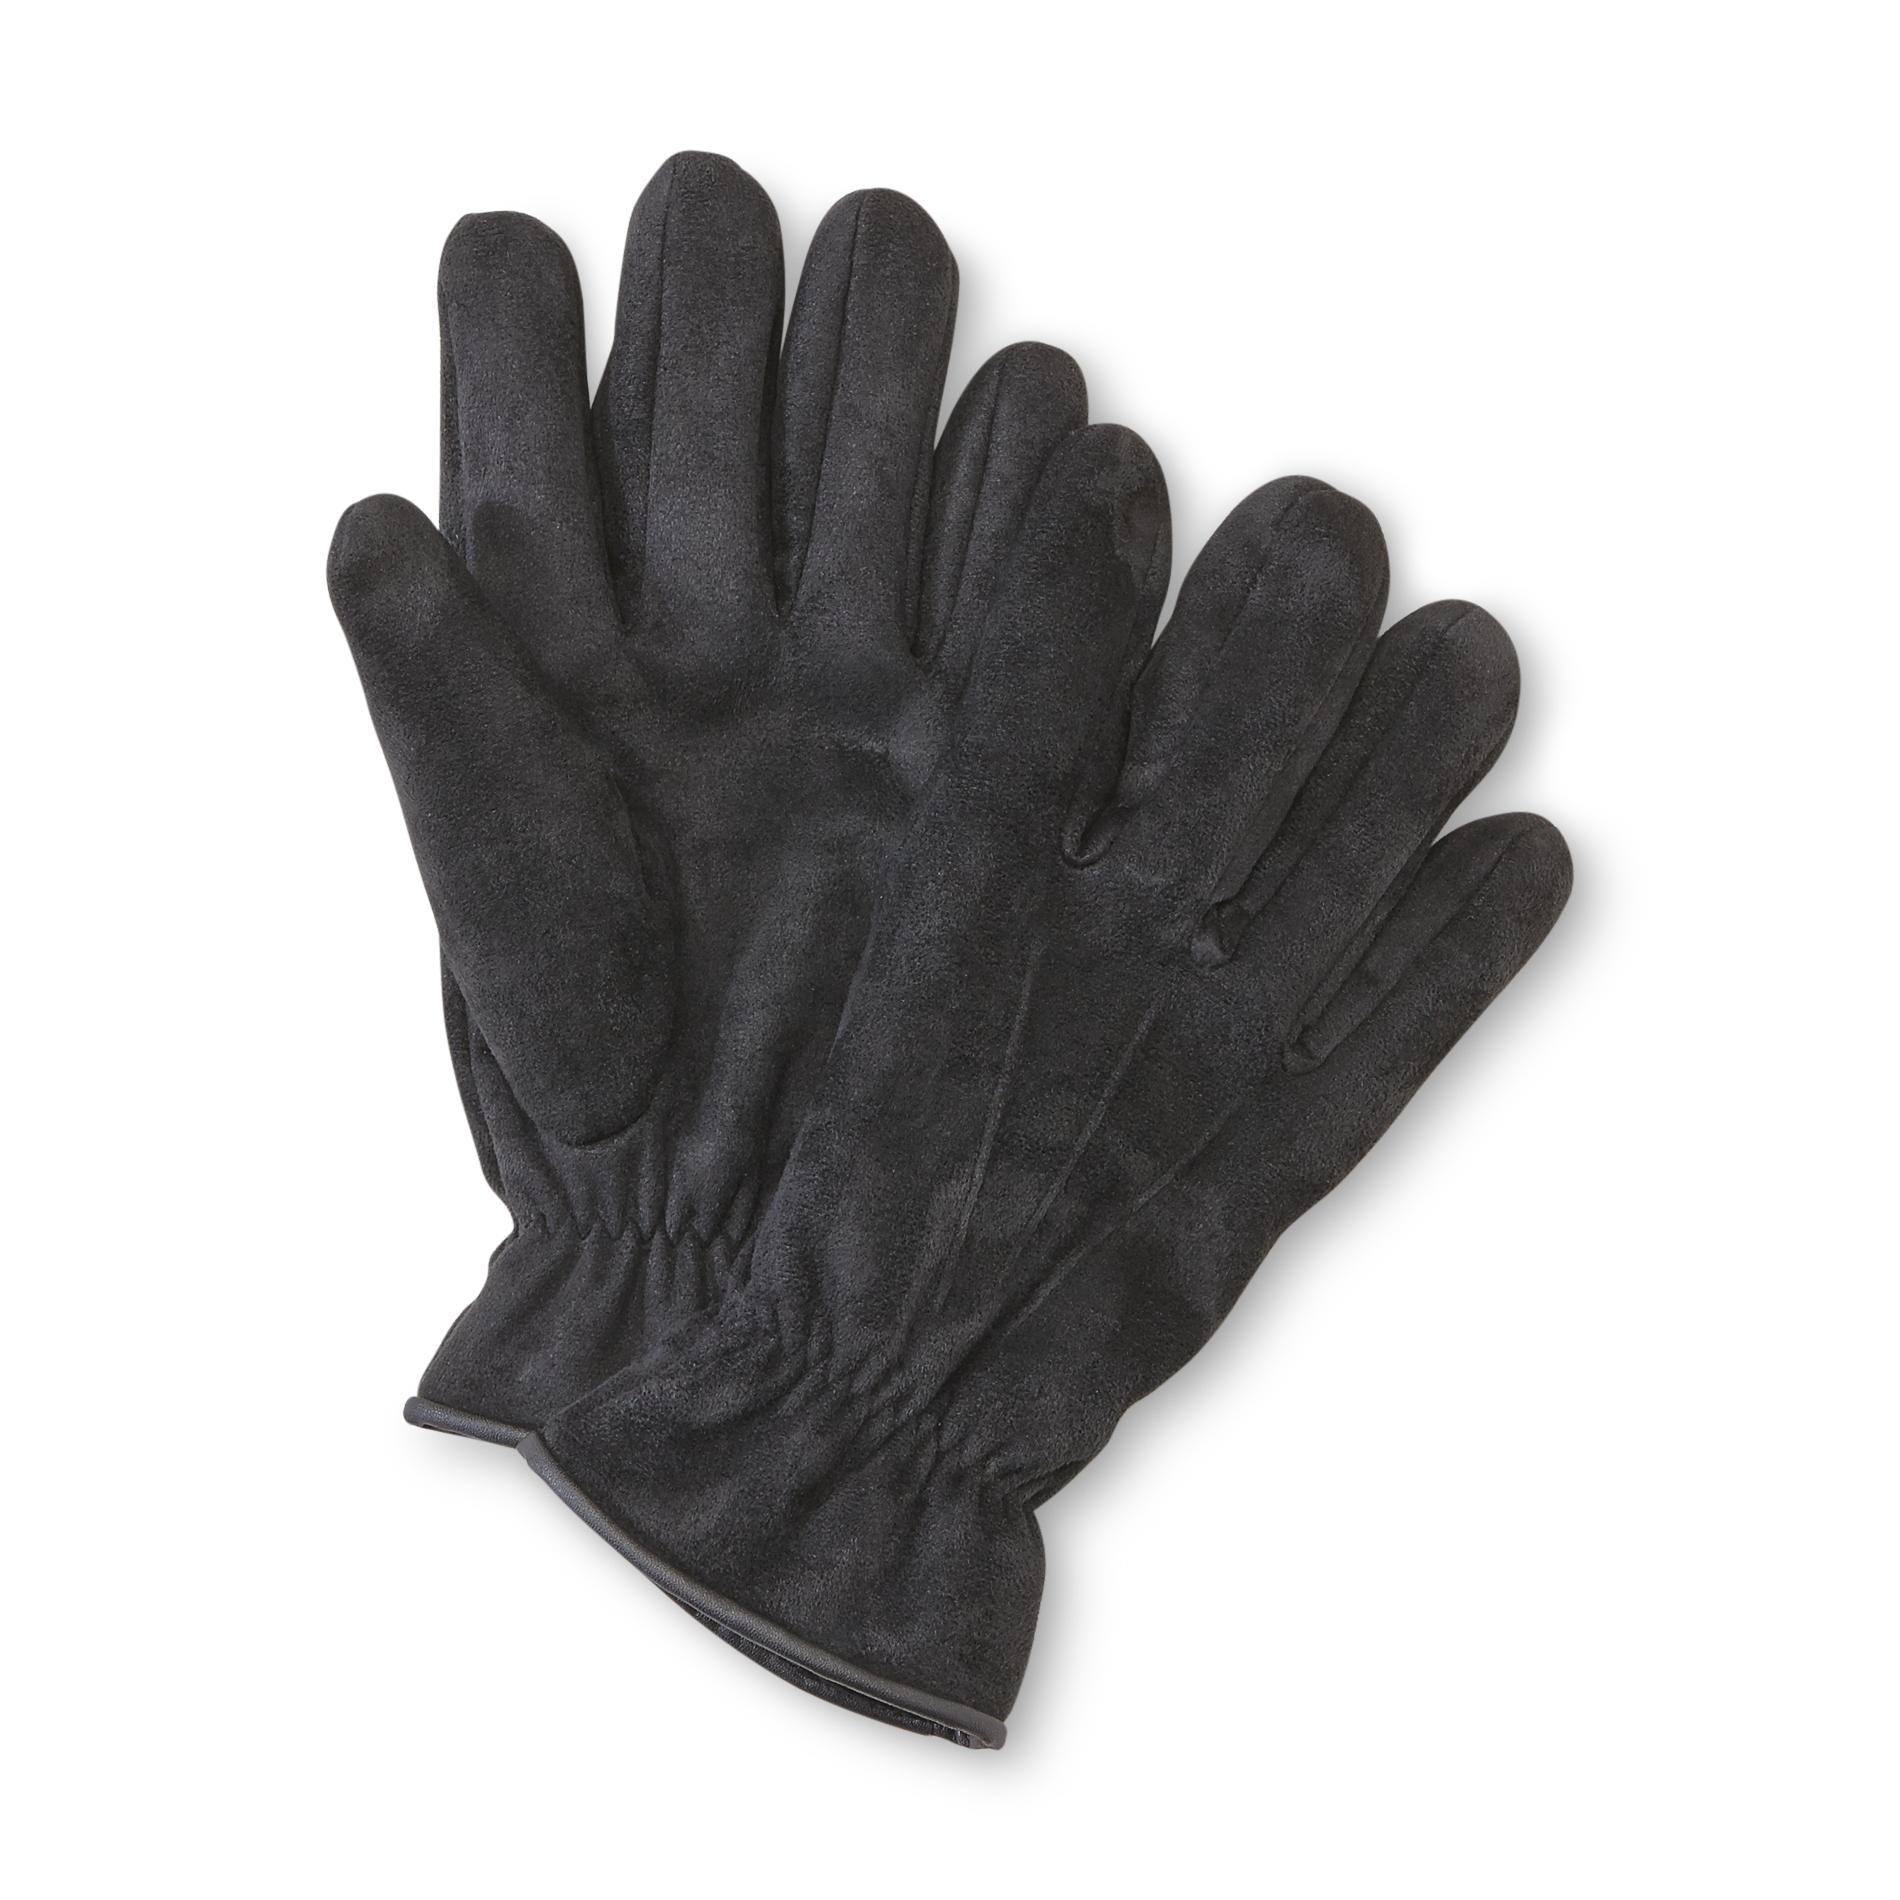 David Taylor Collection Men's Microsuede Gloves